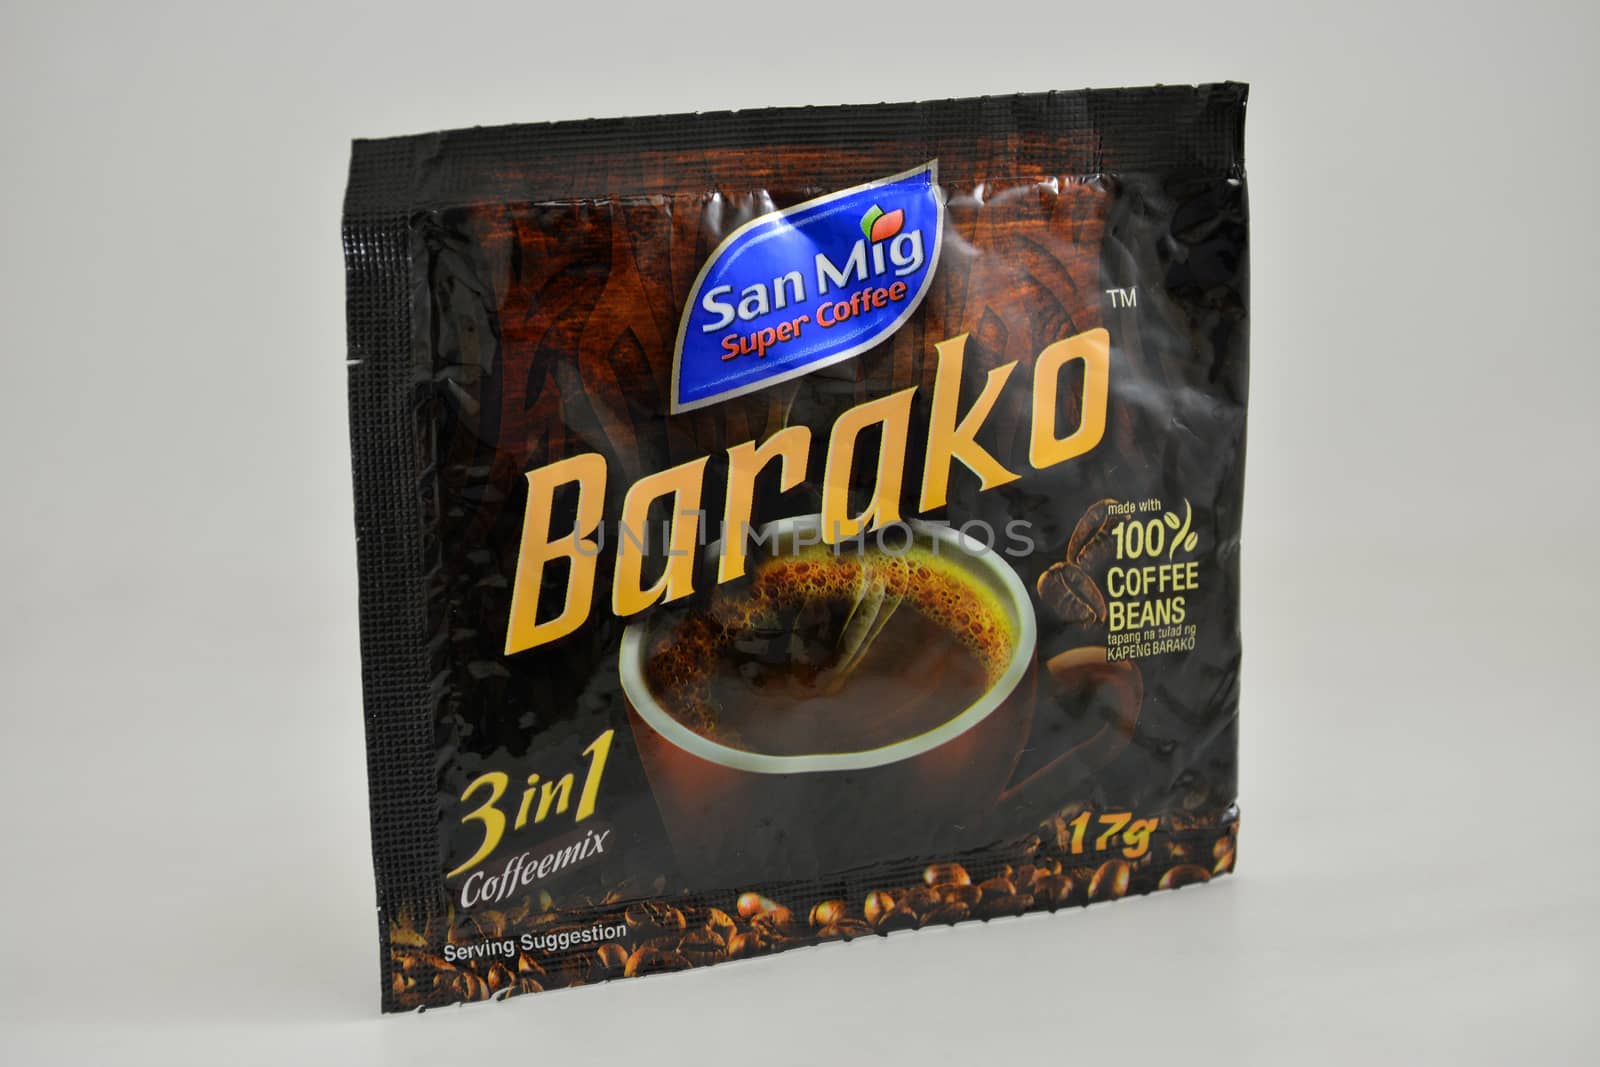 San Mig barako coffee in Manila, Philippines by imwaltersy